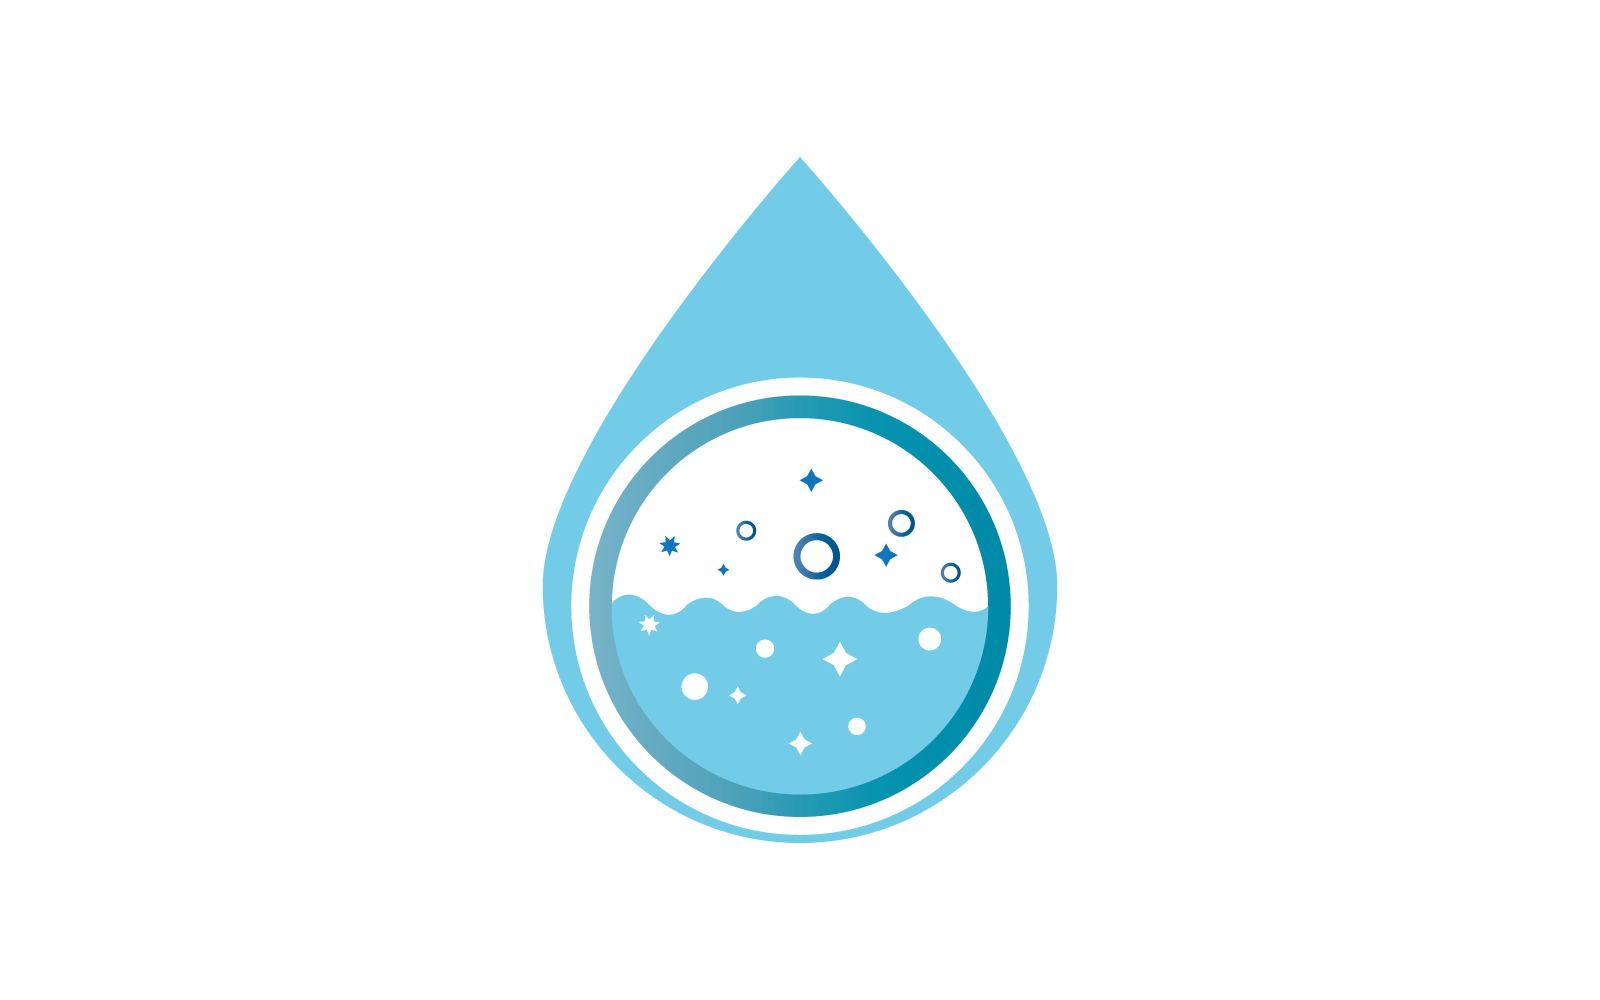 Laundry logo flat design icon vector illustration template